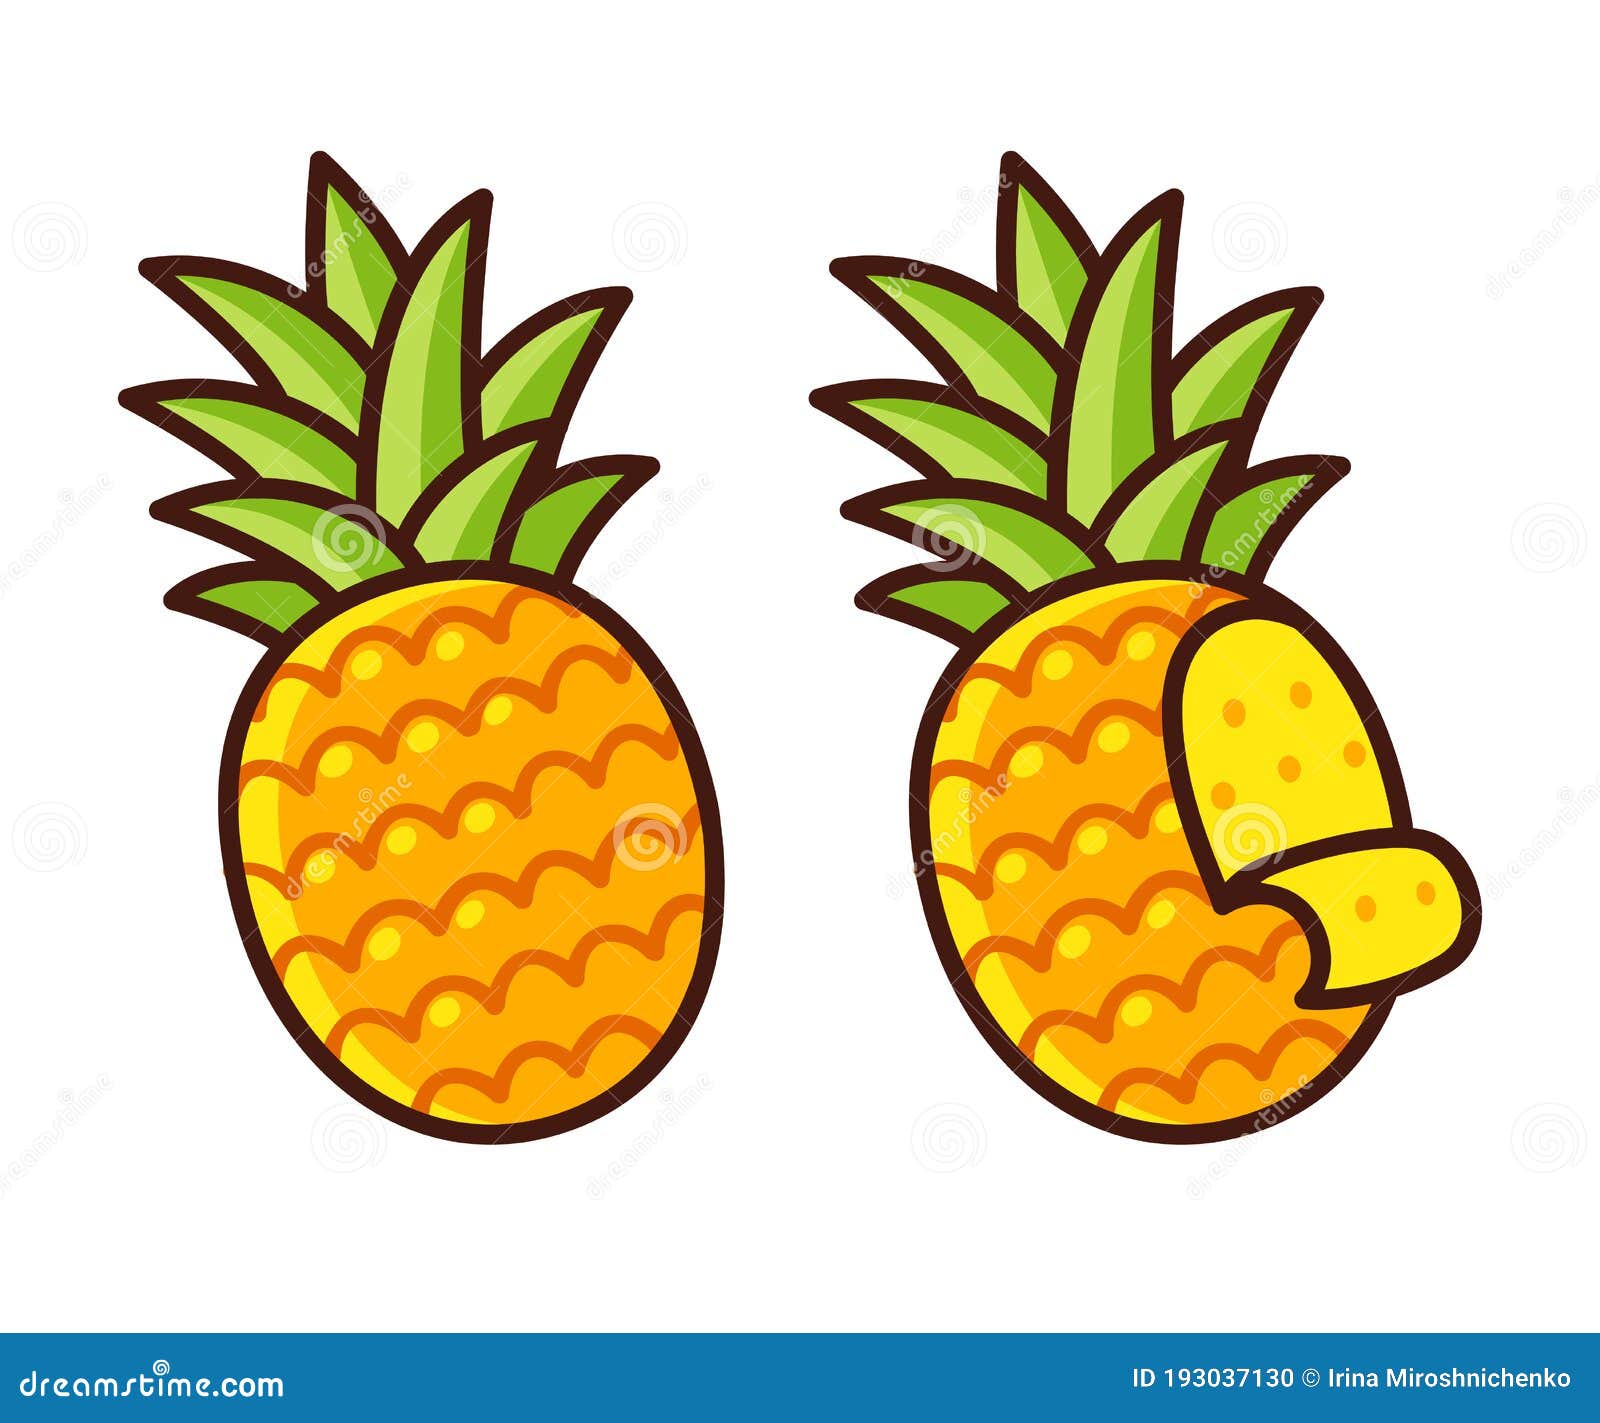 Featured image of post Cartoon Cartoon Vector Image Cartoon Pineapple Images Pineapple fruit for coloring book